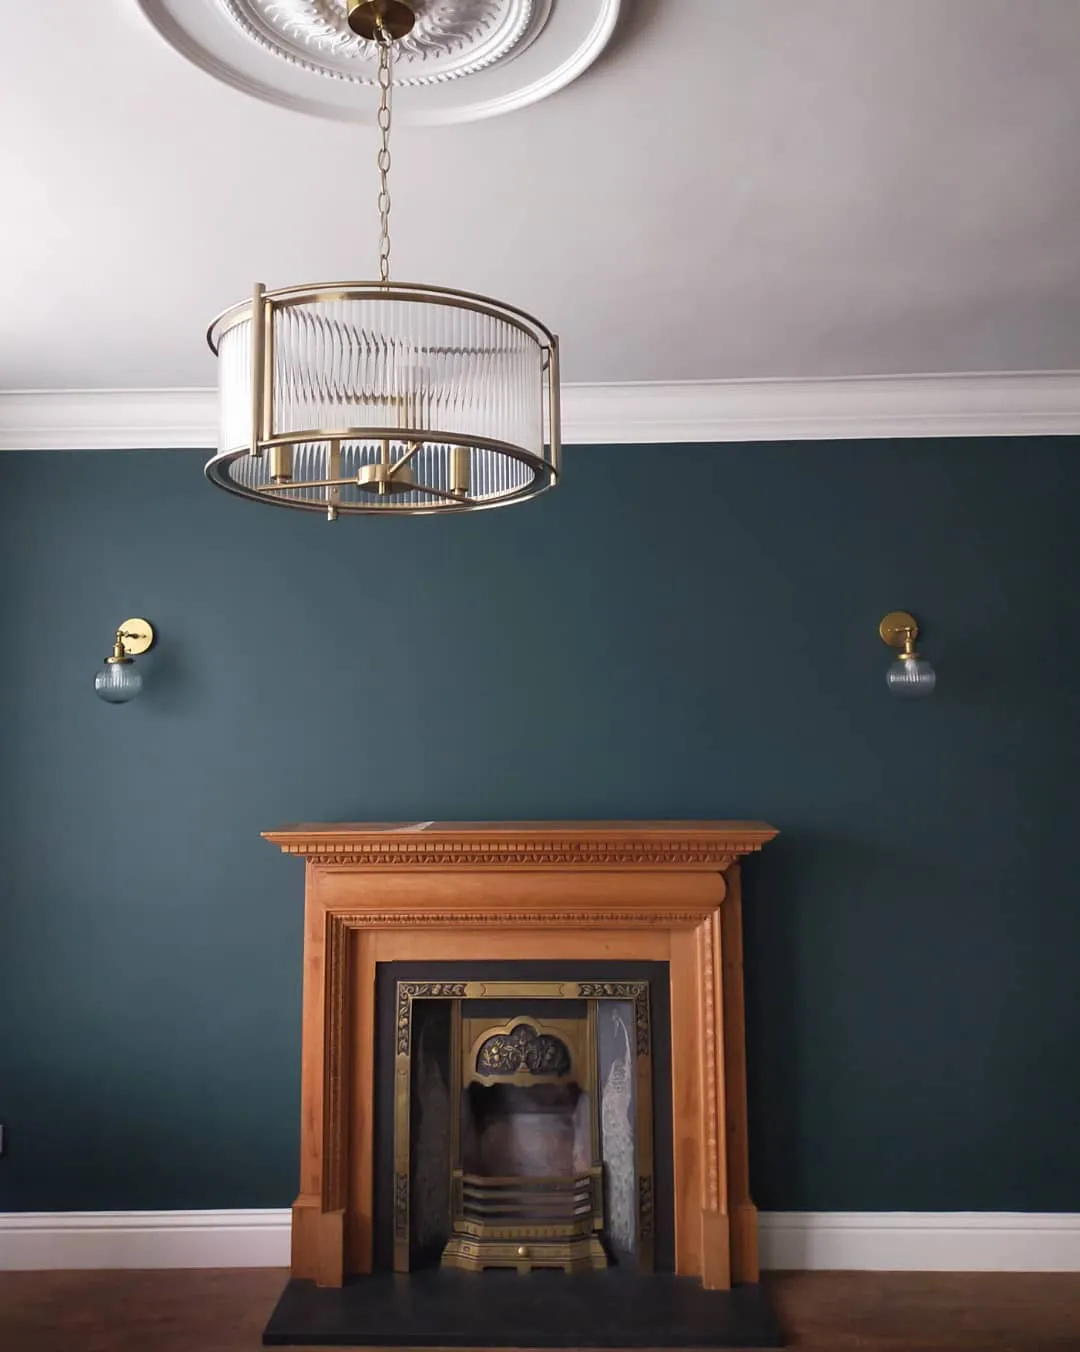 Victorian home interior with dark green Harley Green